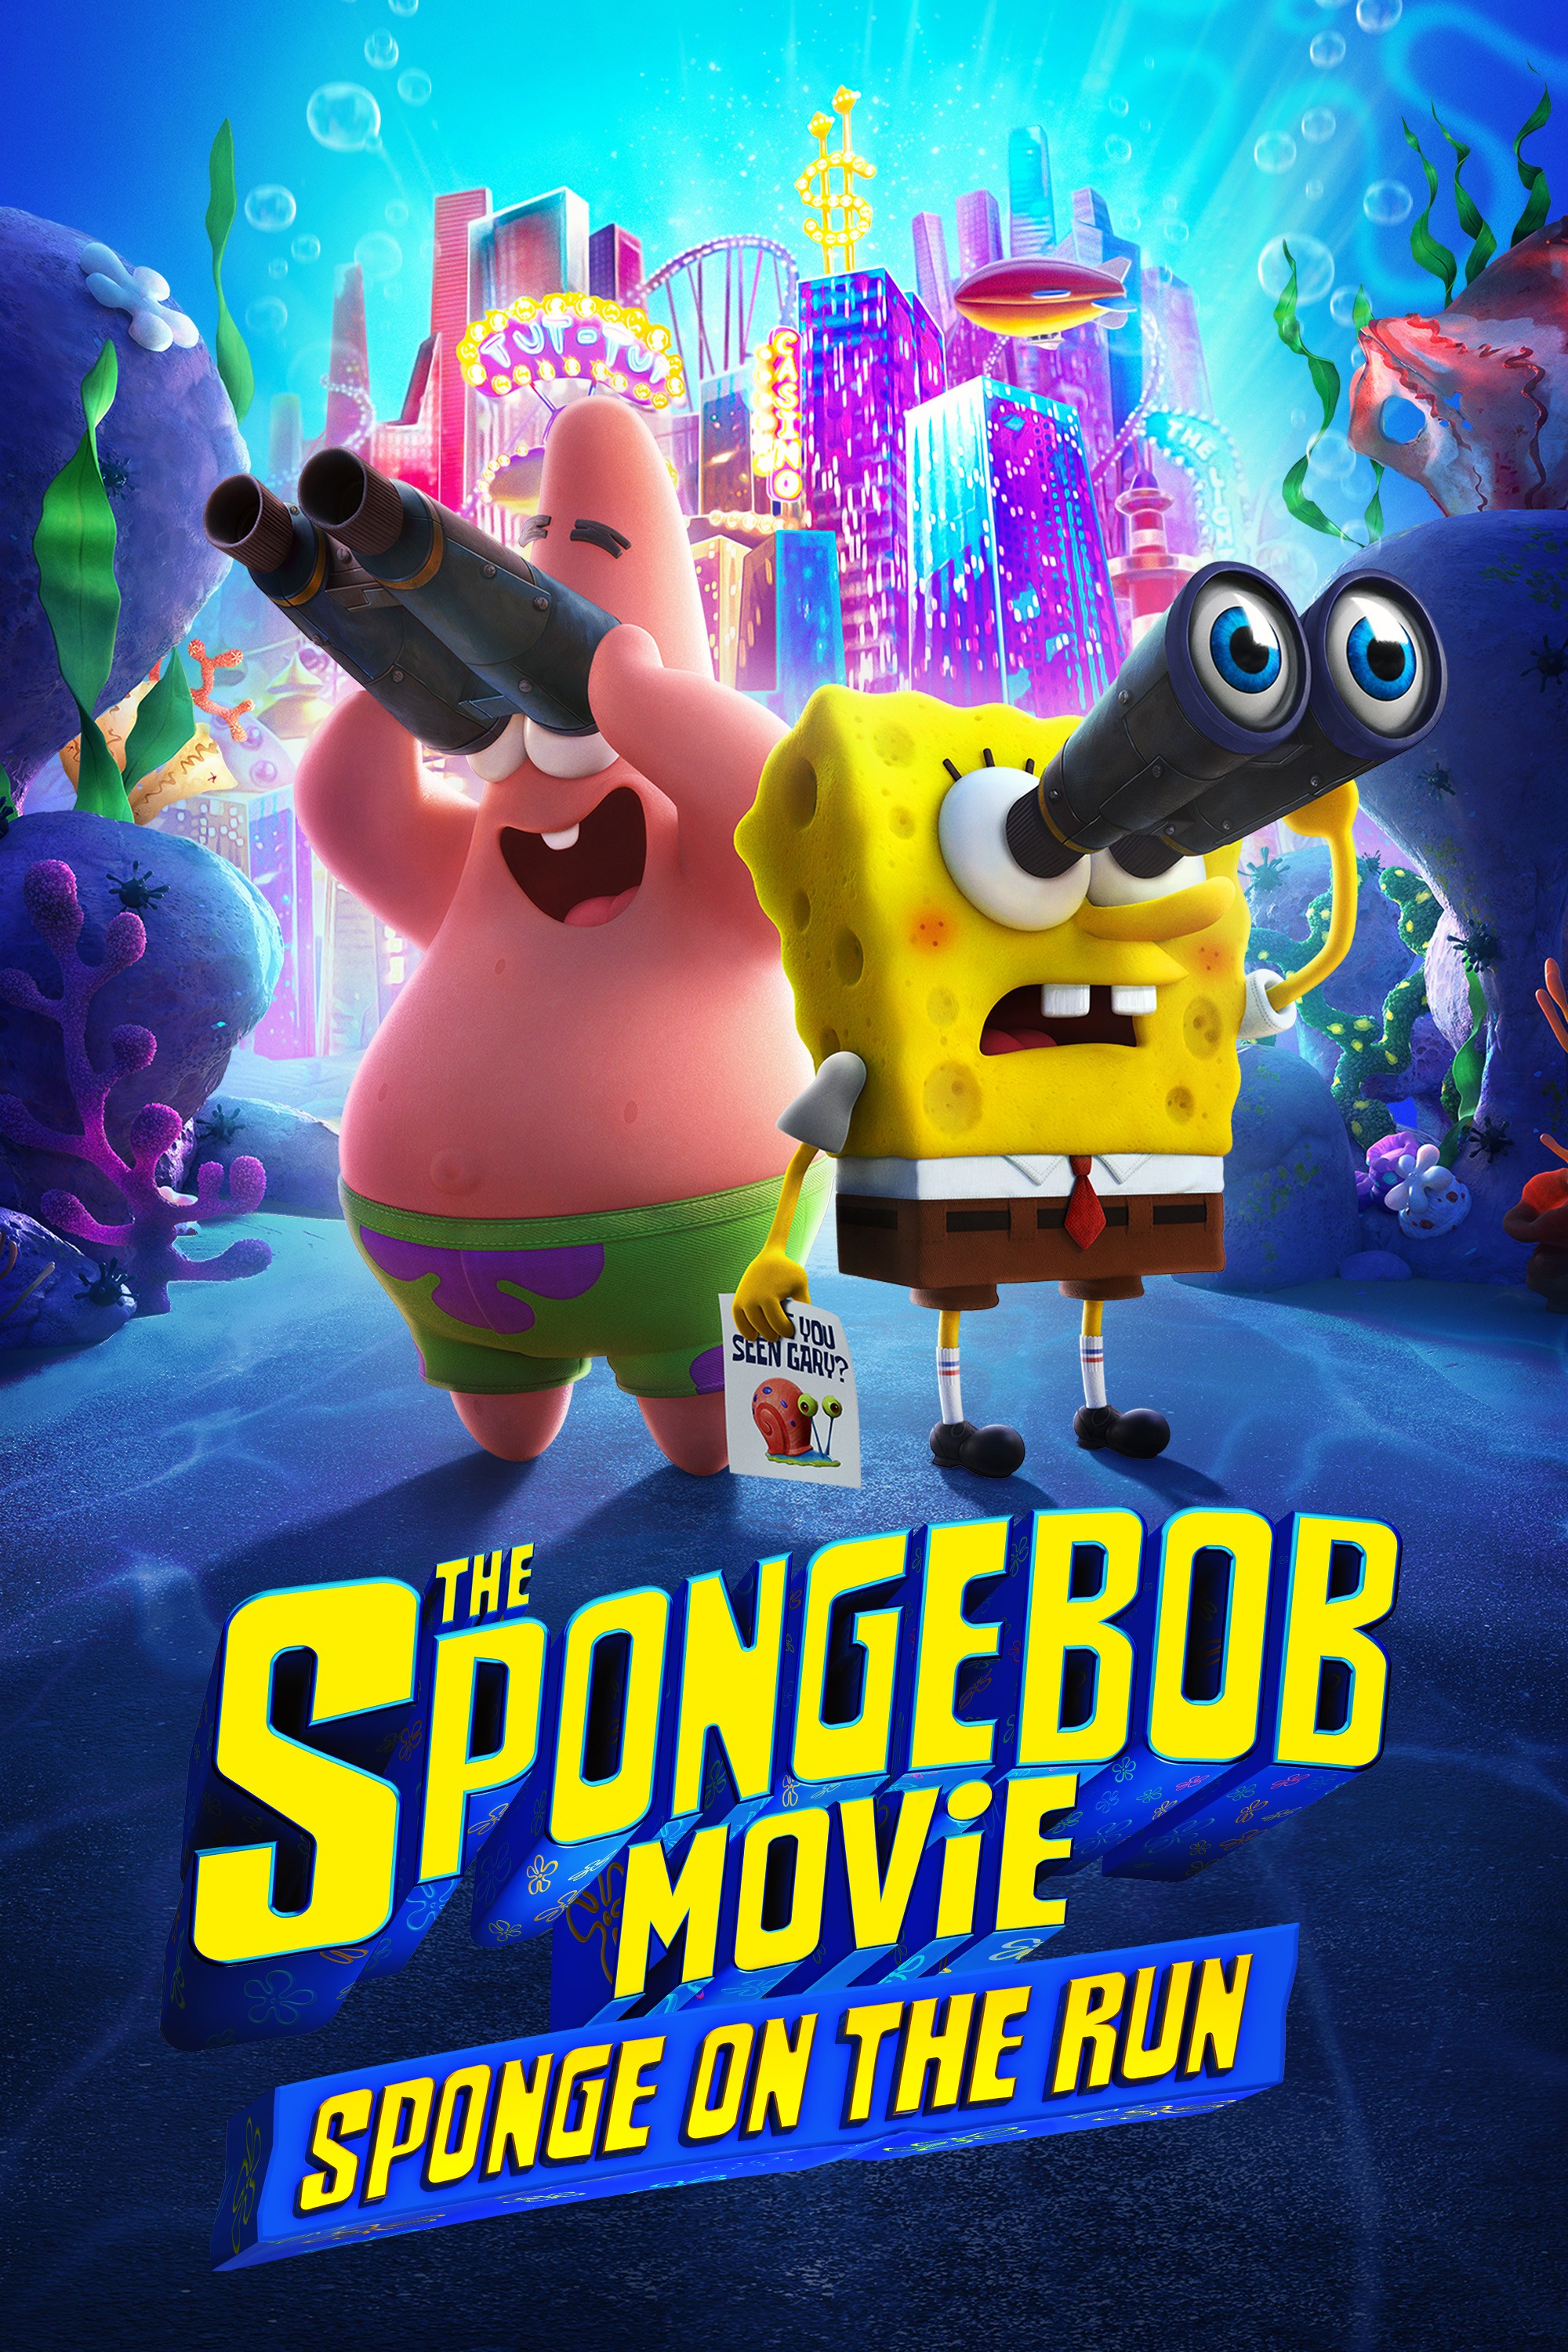 The Spongebob Movie Sponge On The Run Trailer 2 Trailers Videos Rotten Tomatoes